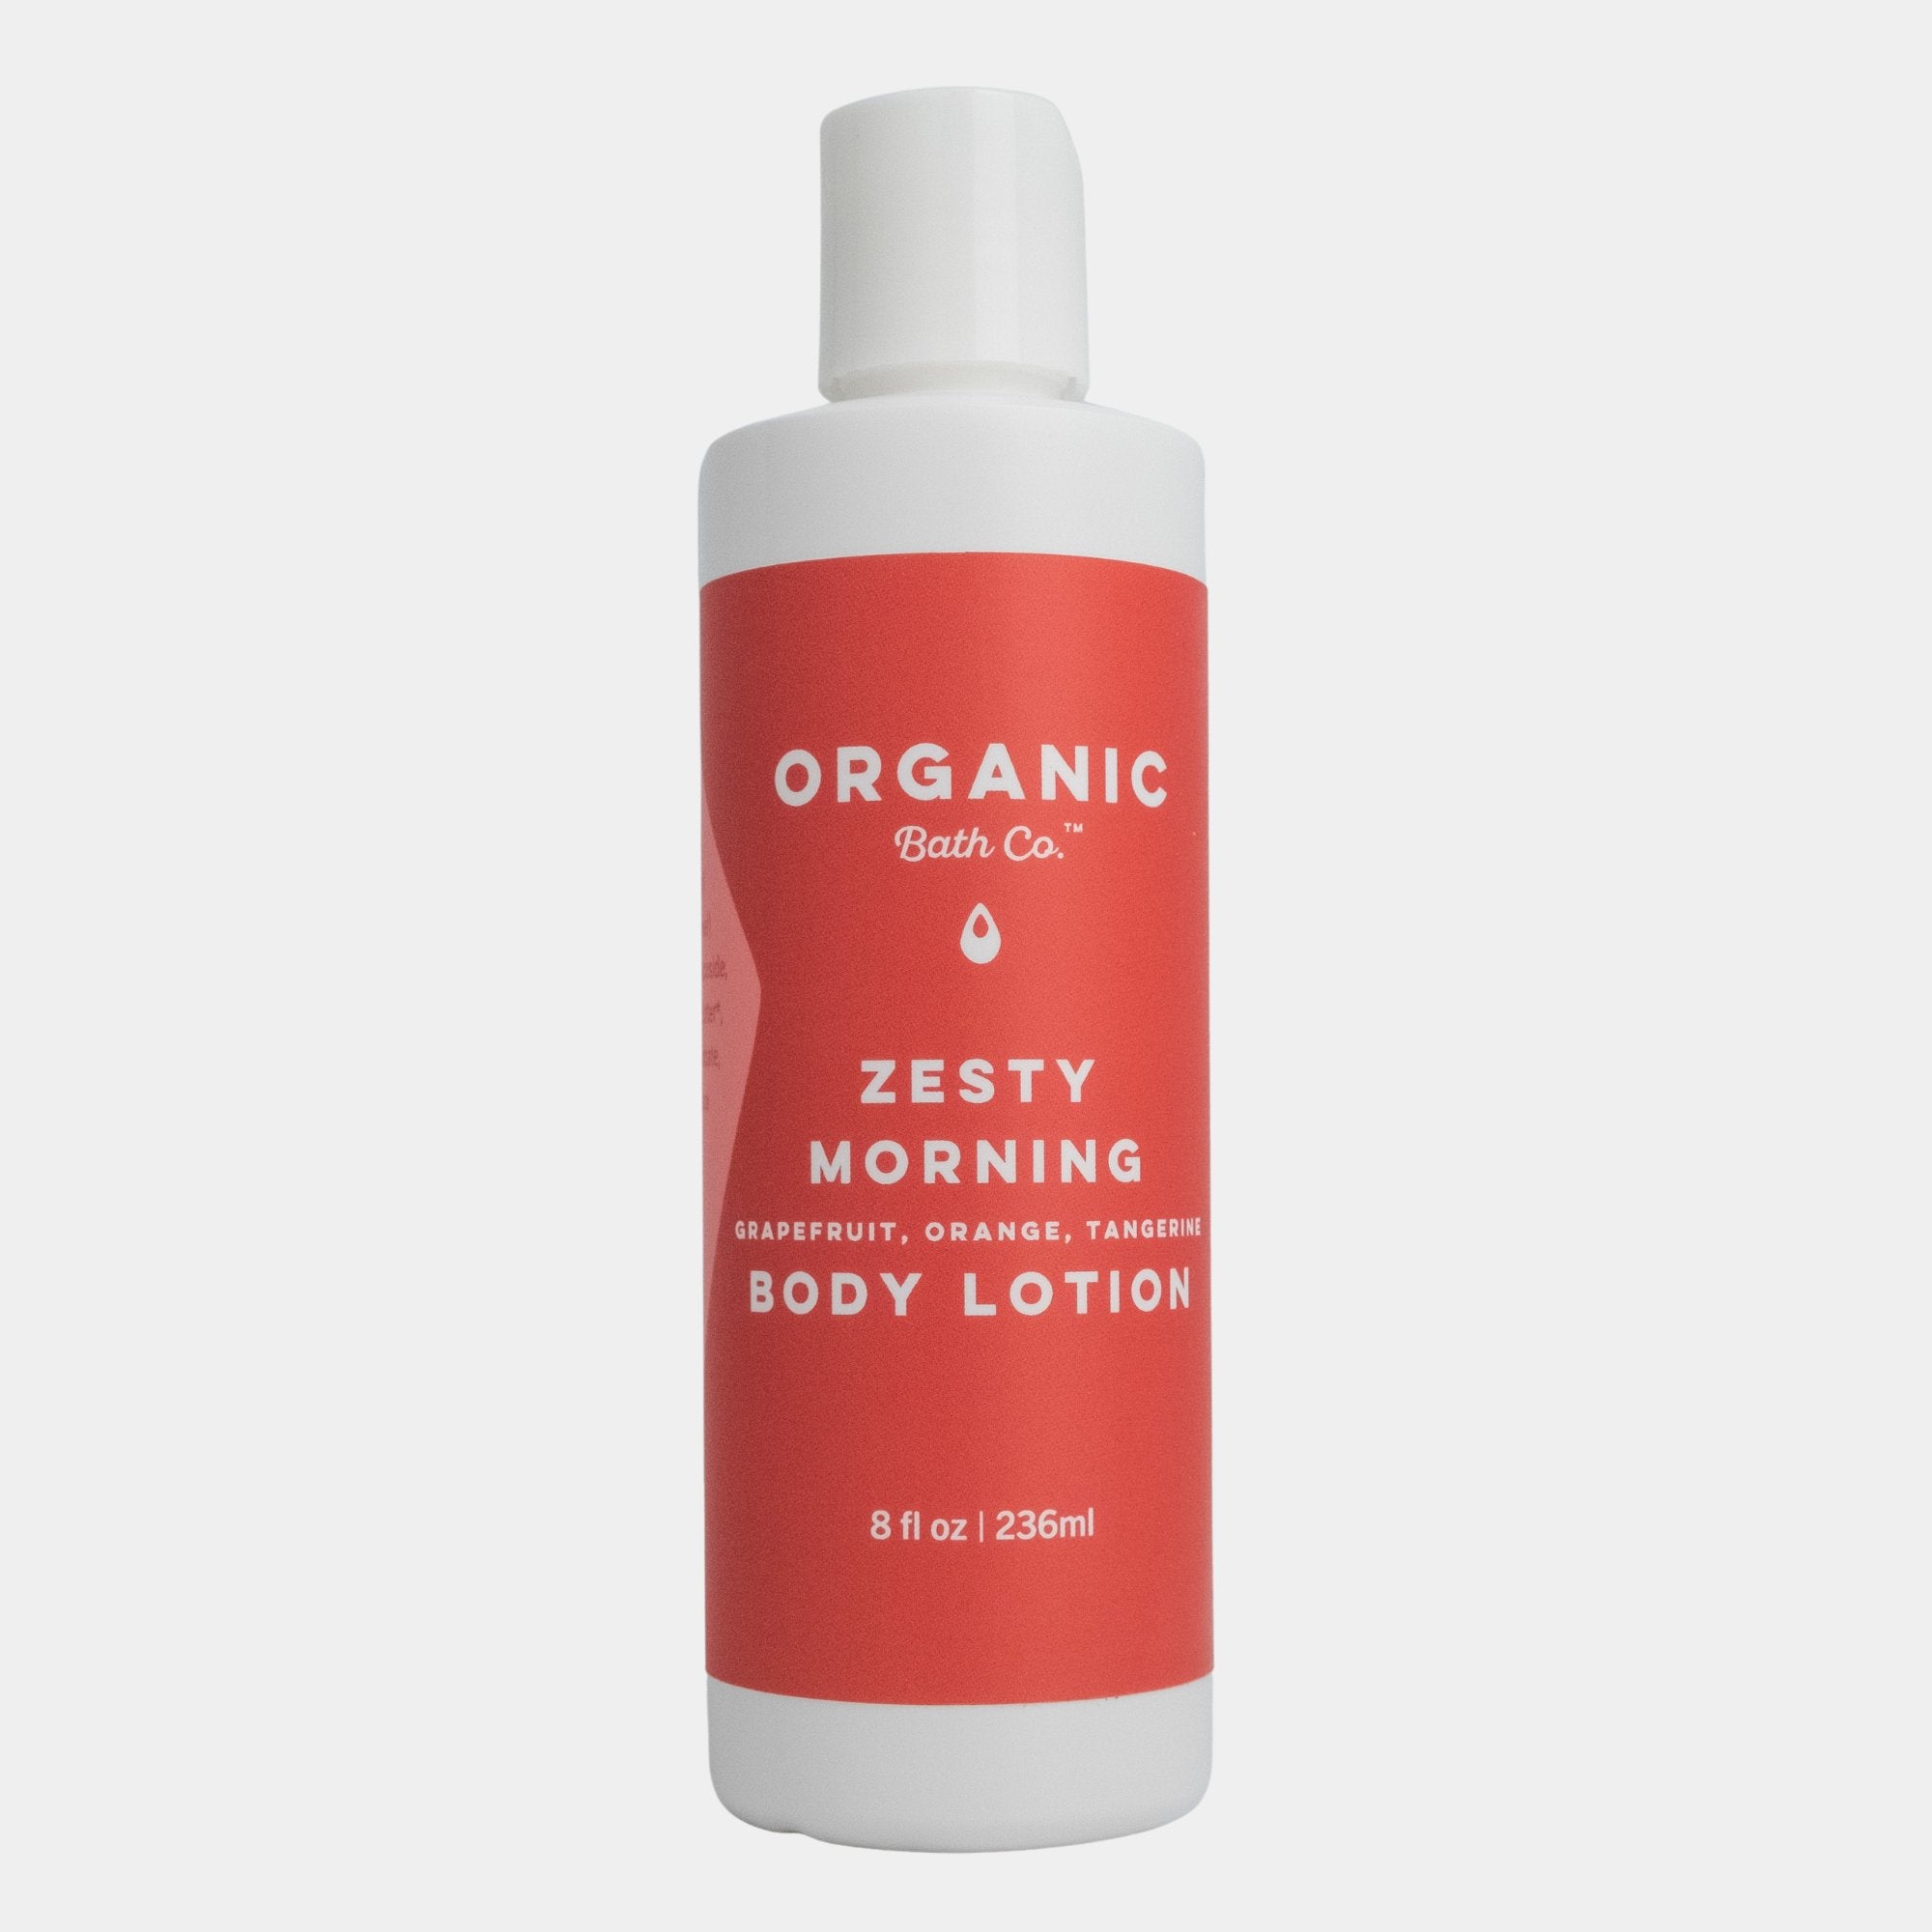 Zesty Morning Body Lotion - Organic Bath Co.